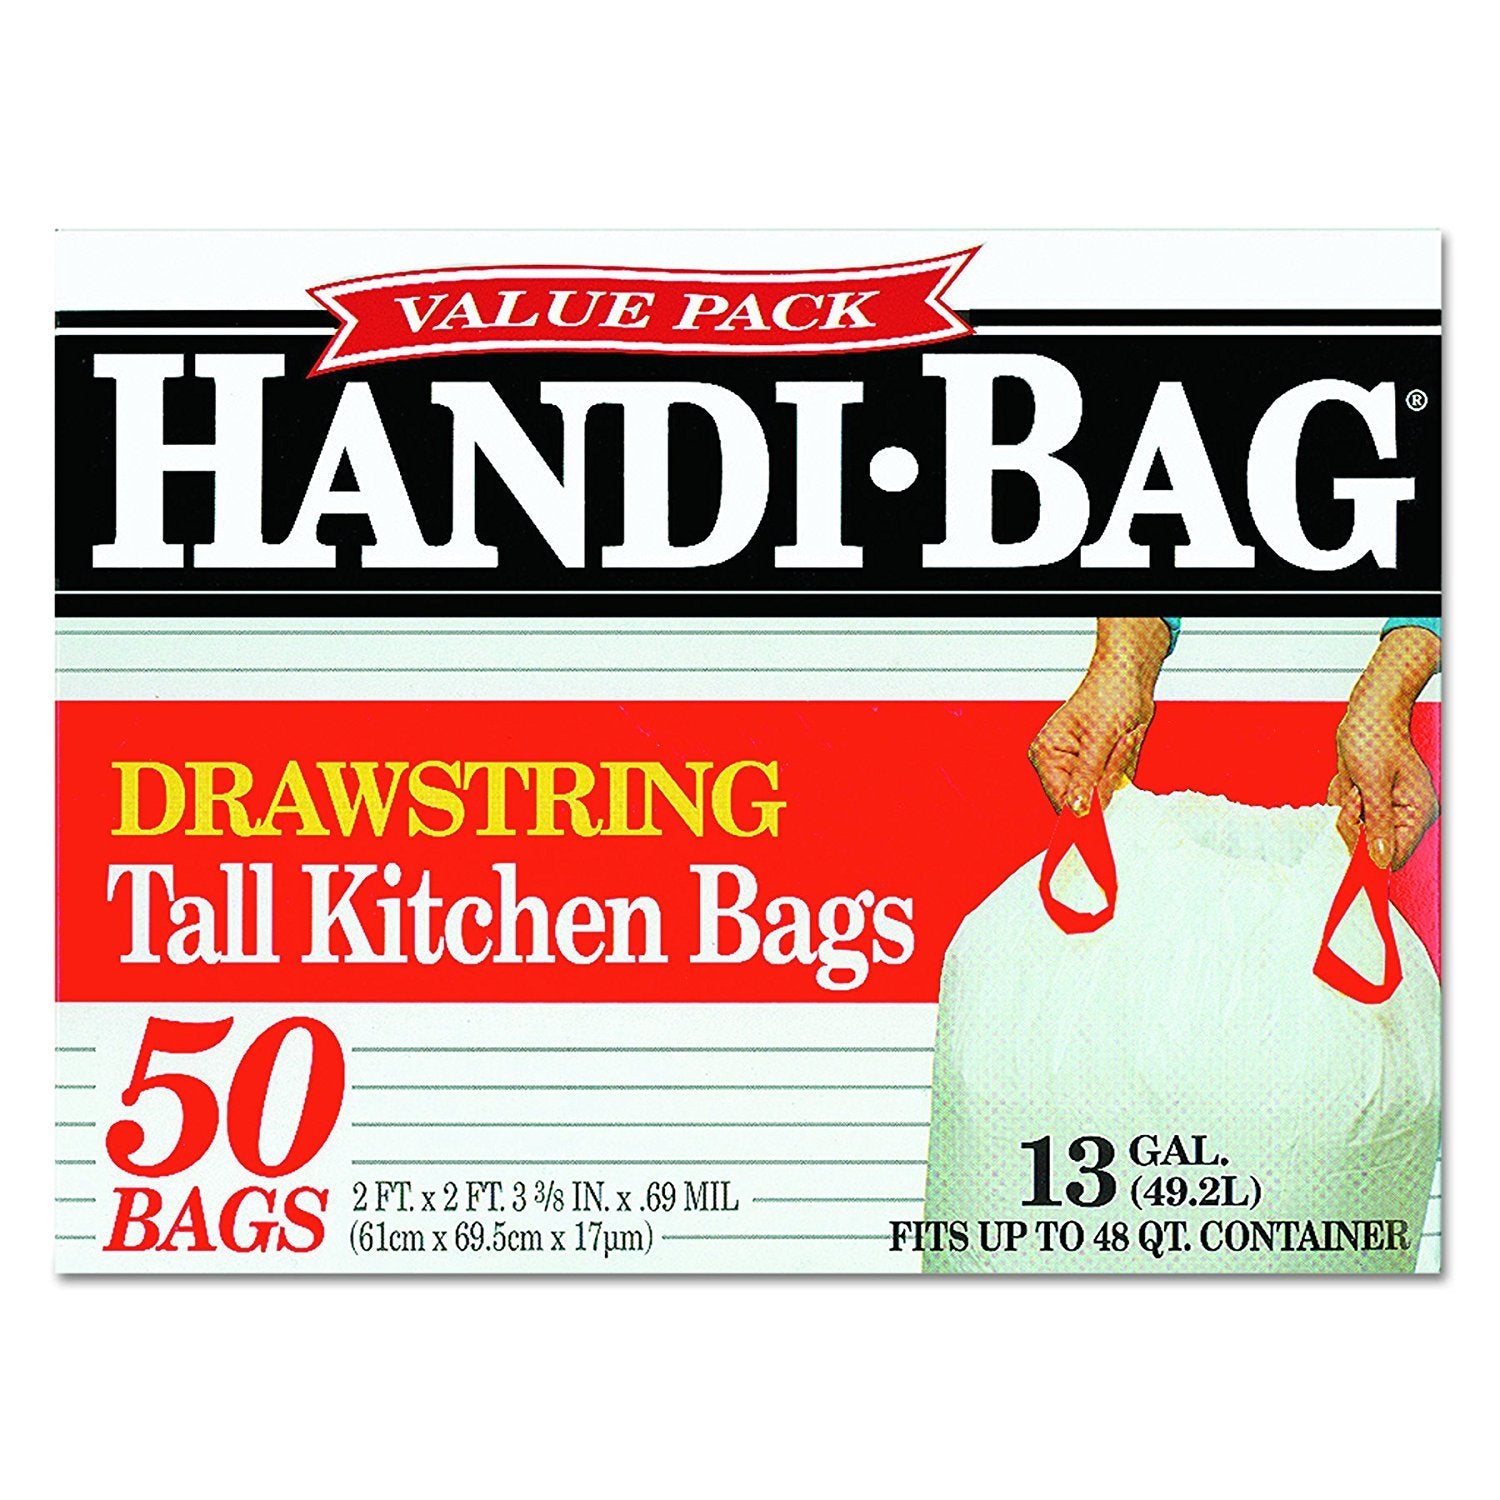 Handi-Bag - Tall Kitchen Drawstring Trash Bags, 13 Gallon, White, 50 Pack - Case of 6